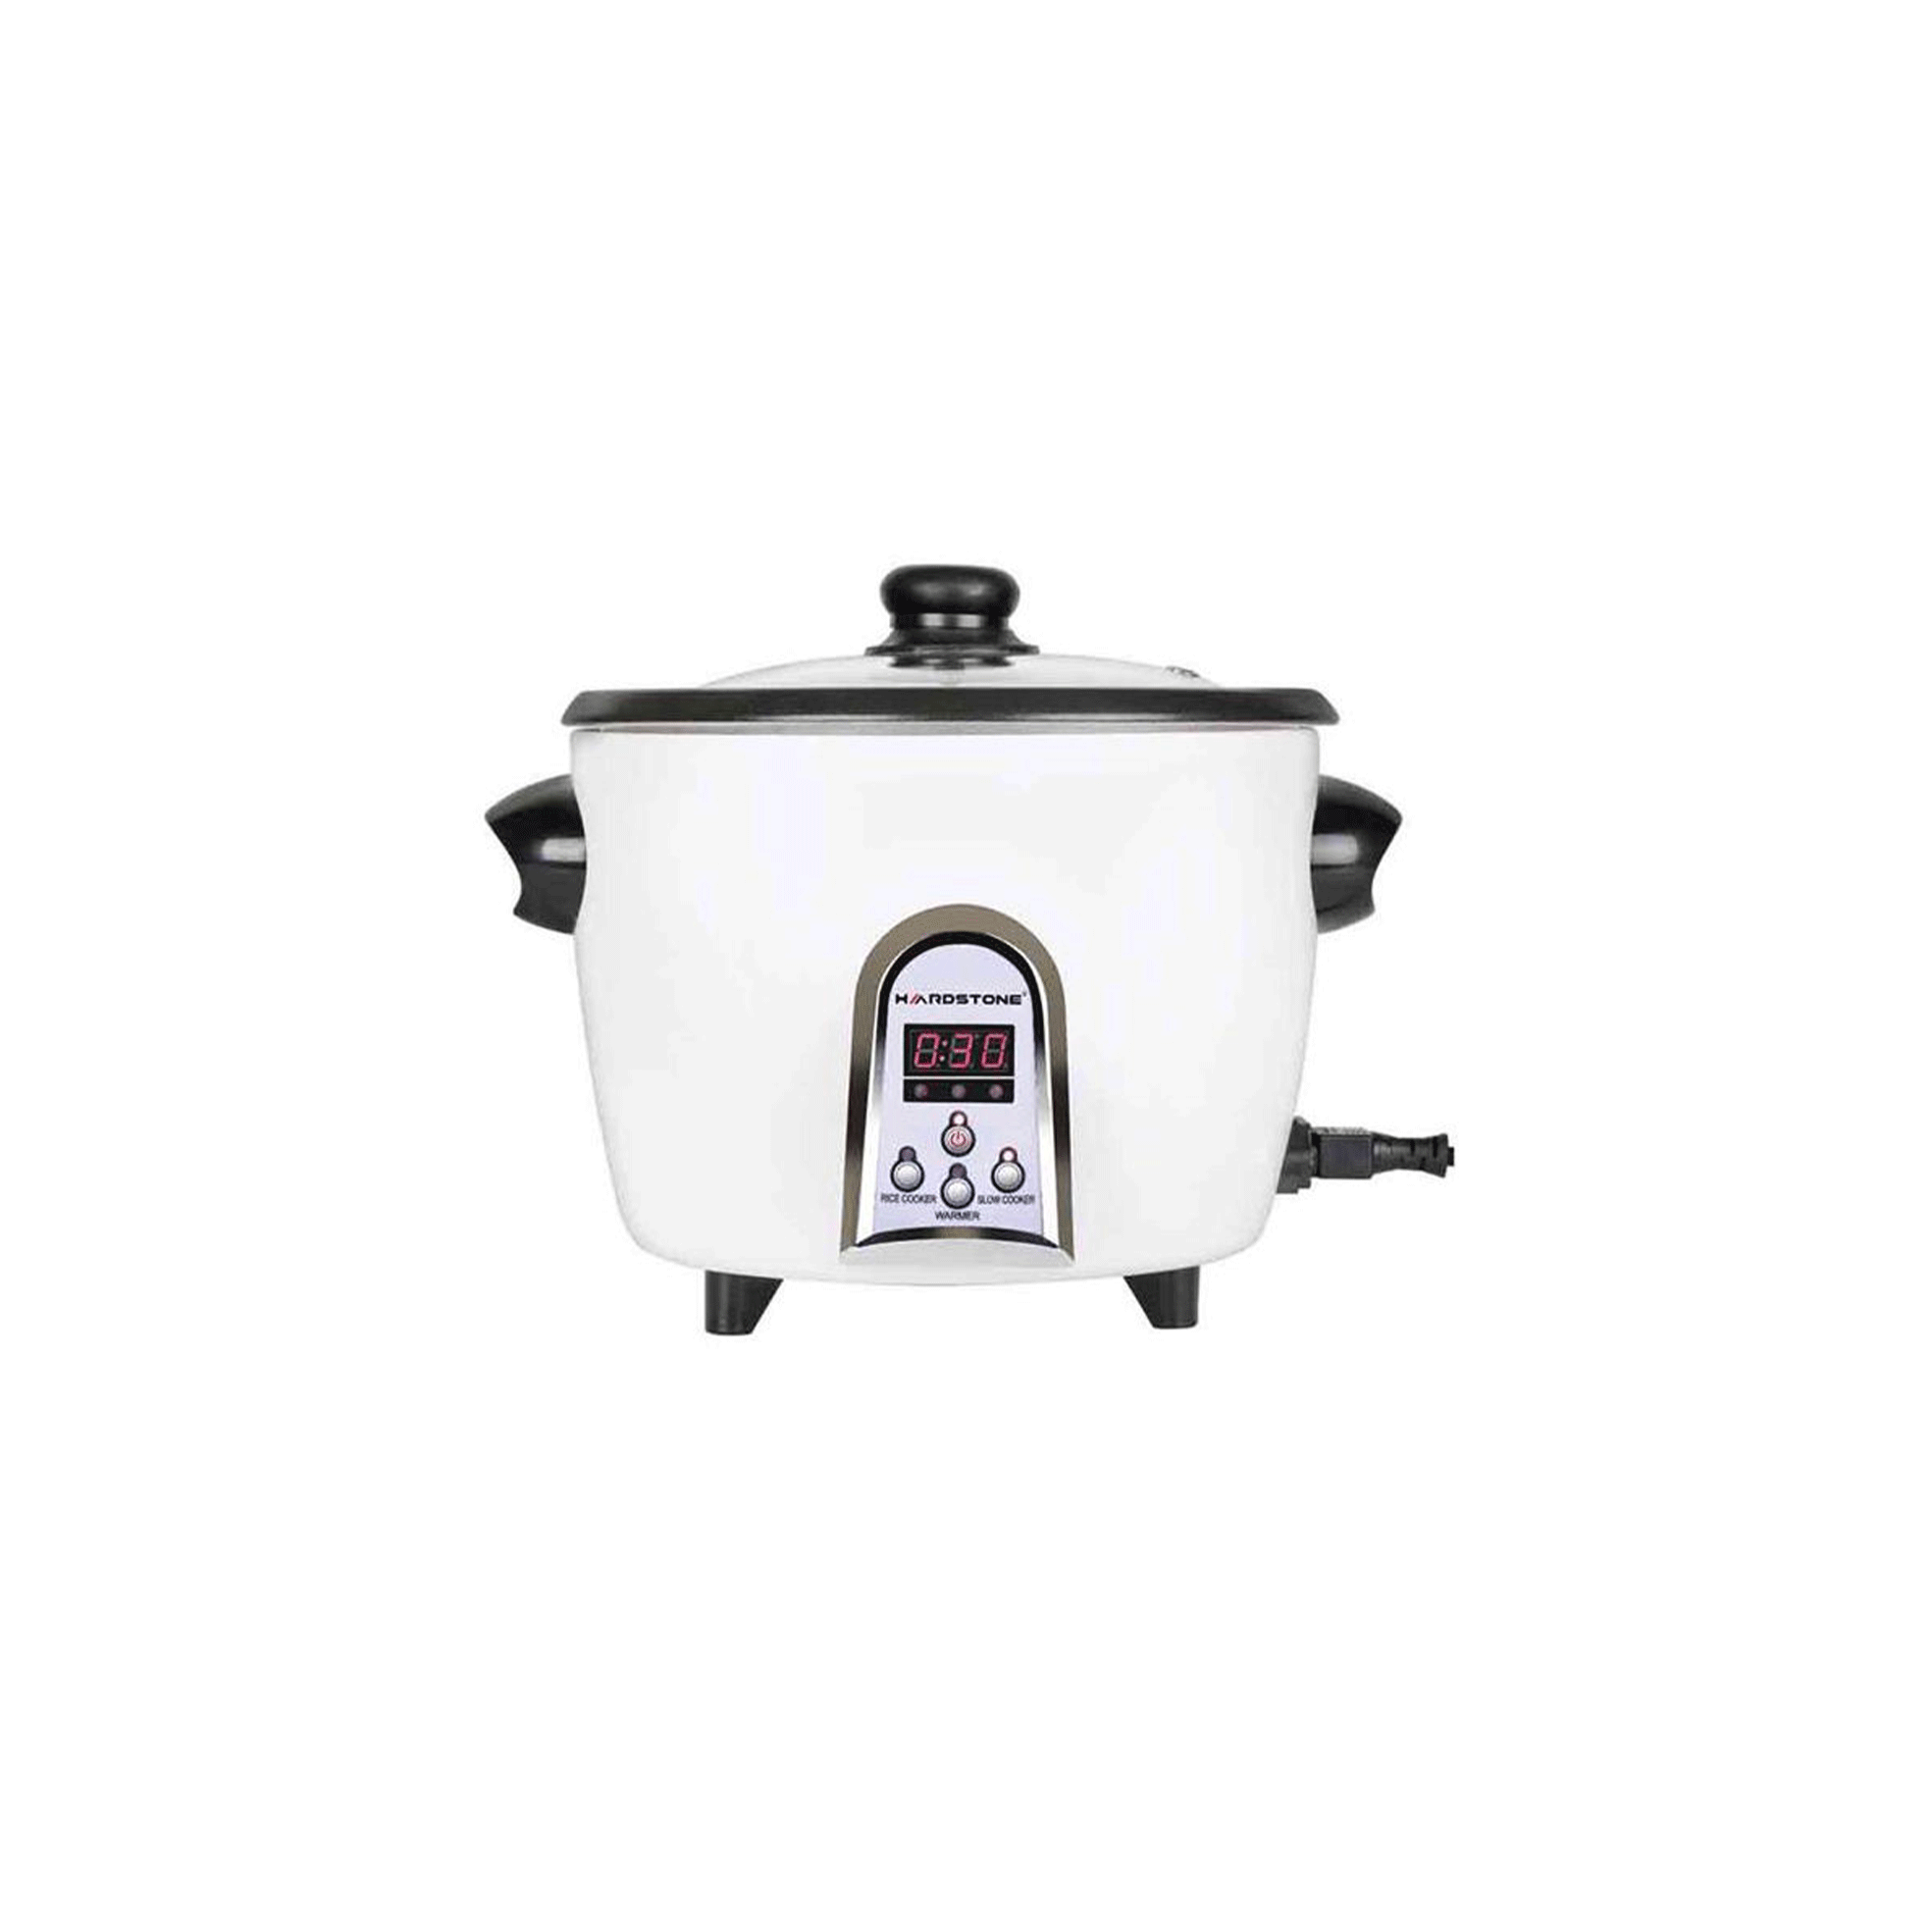 Hardstone rice cooker model RCM6310W